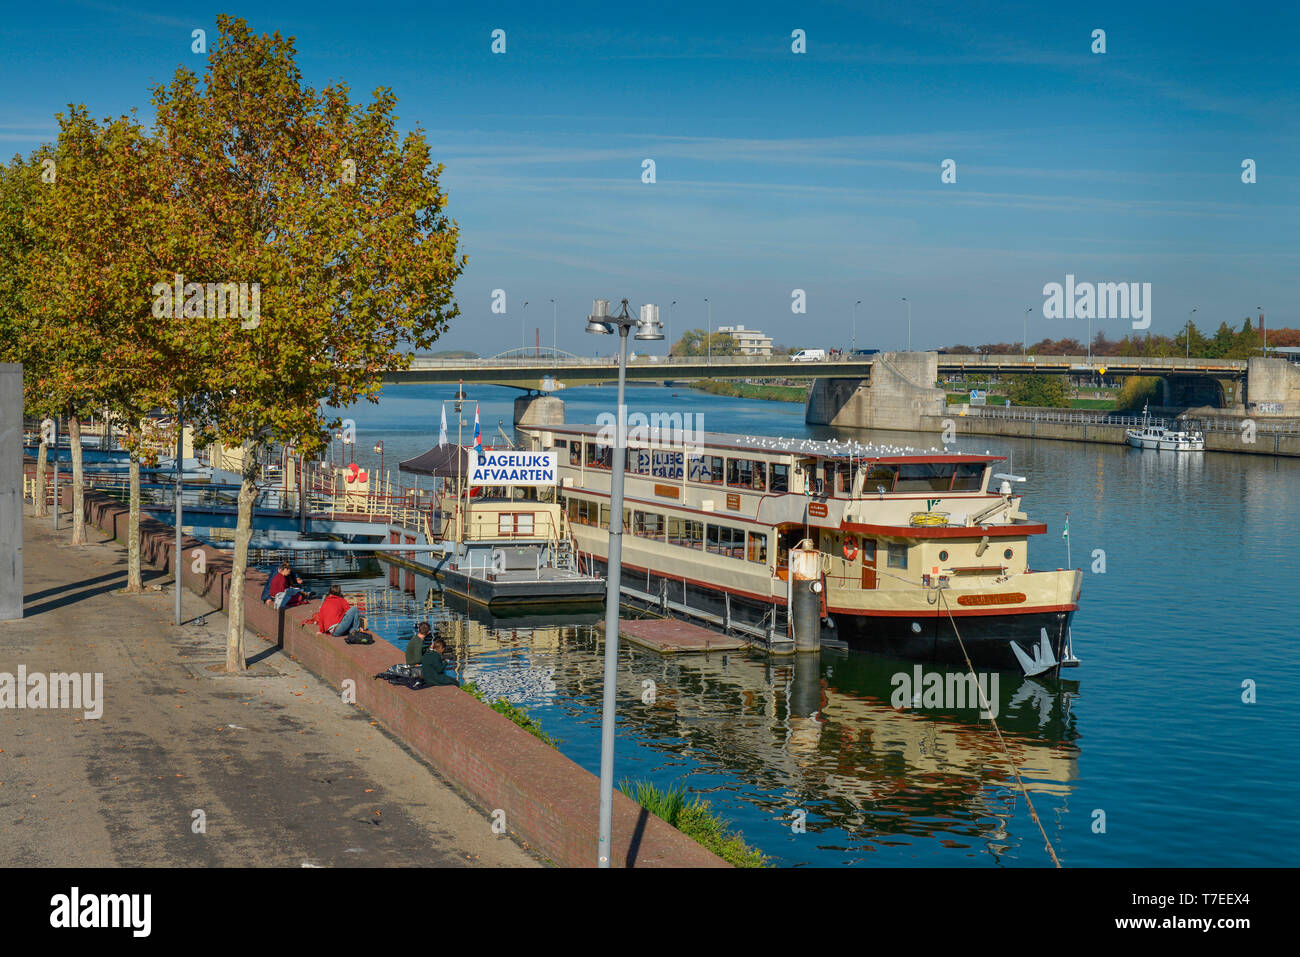 Flussufer, Dampfer, Maas, Maastricht, Niederlande Foto Stock